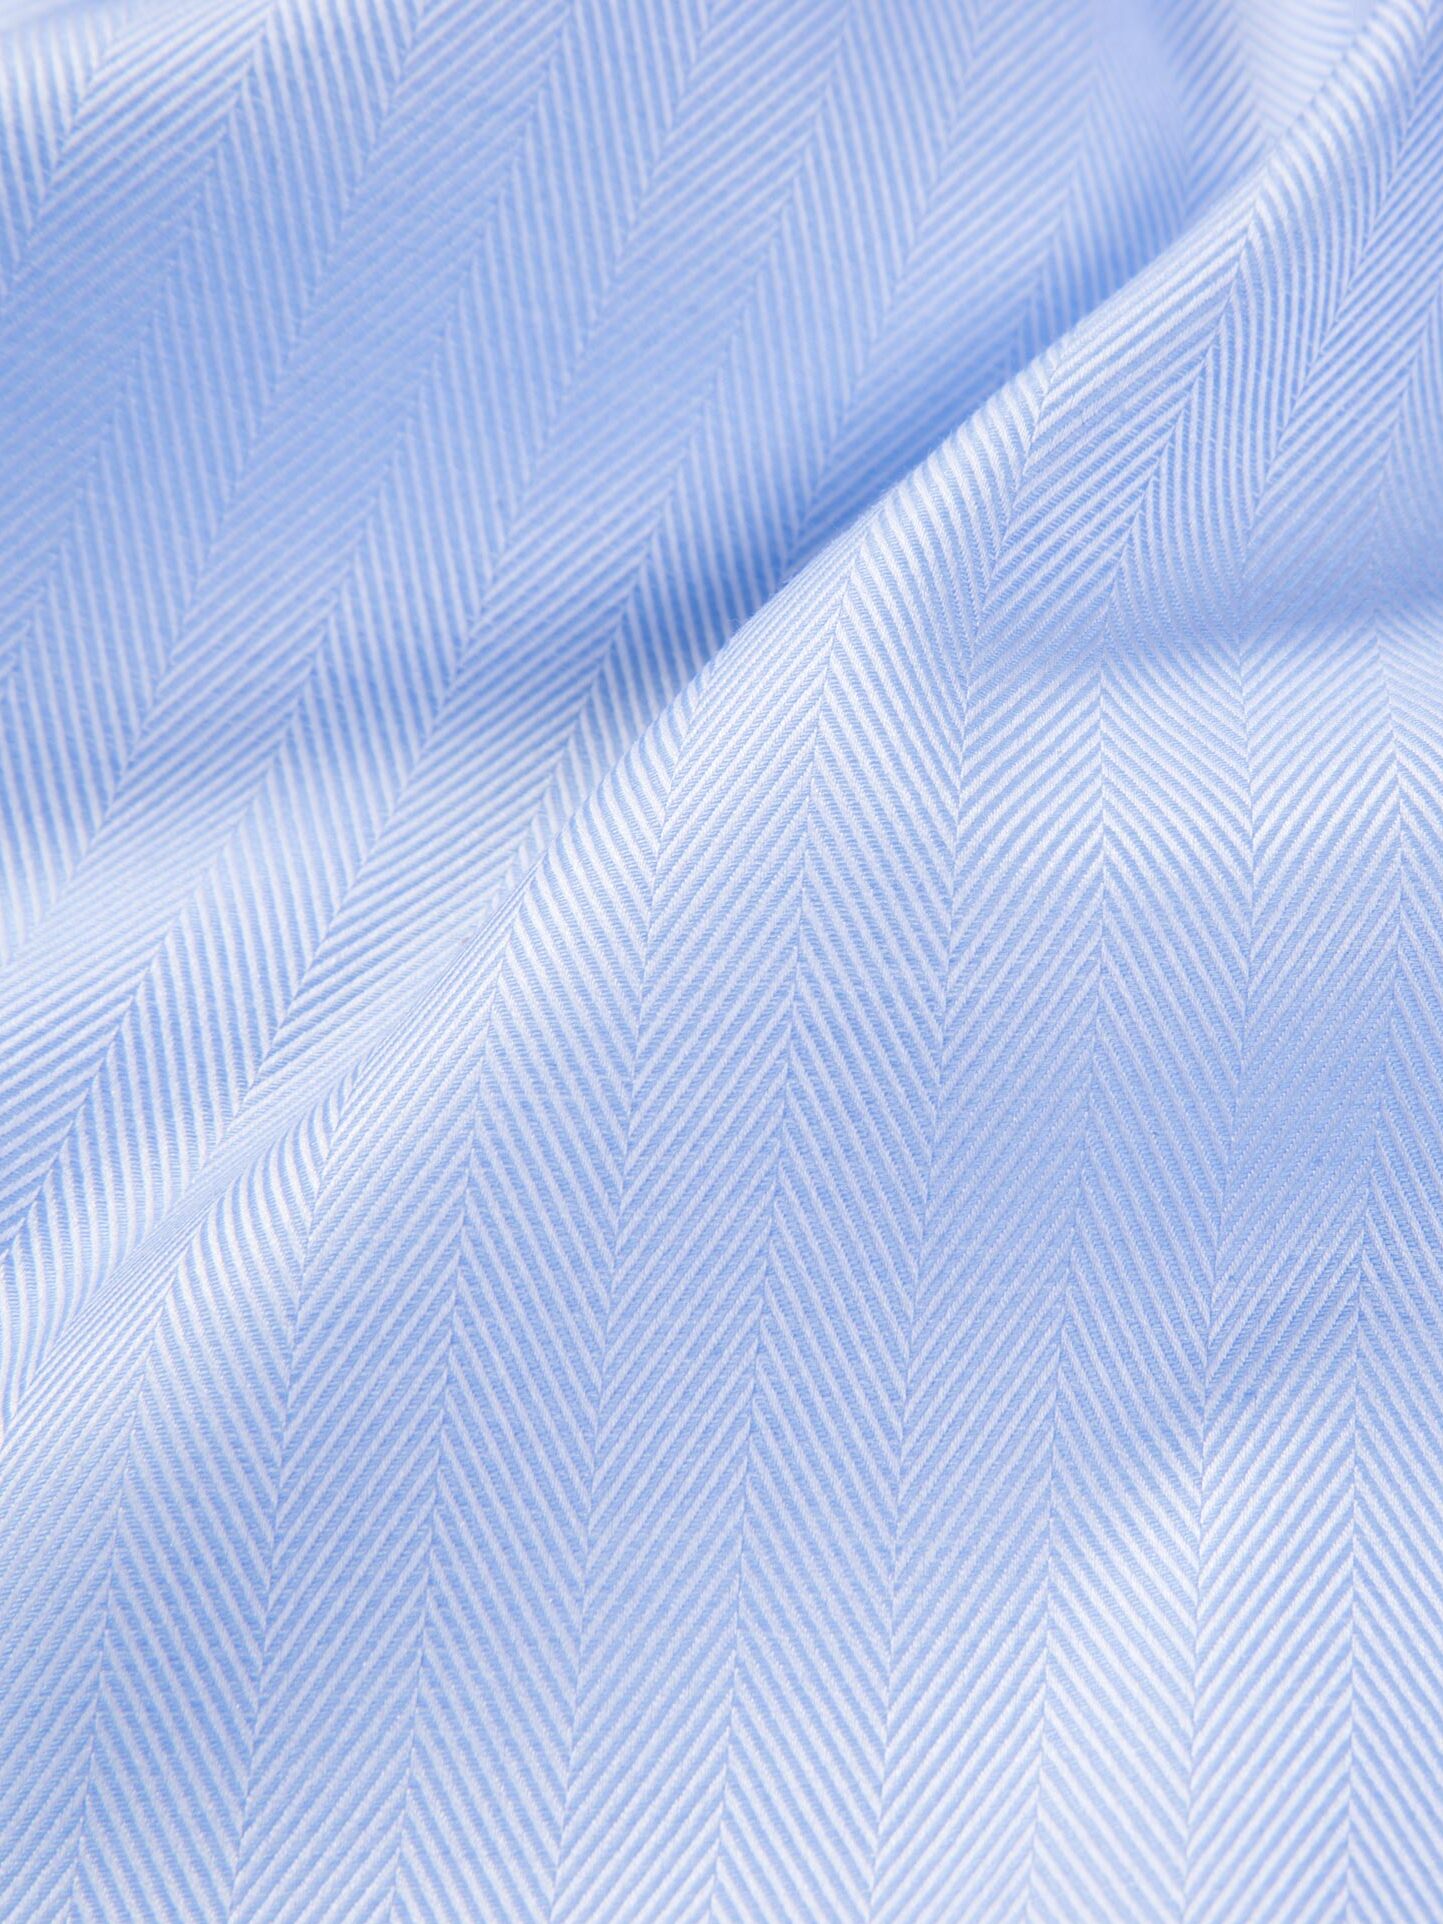 Dover 120s Light Blue Royal Herringbone Shirts by Proper Cloth